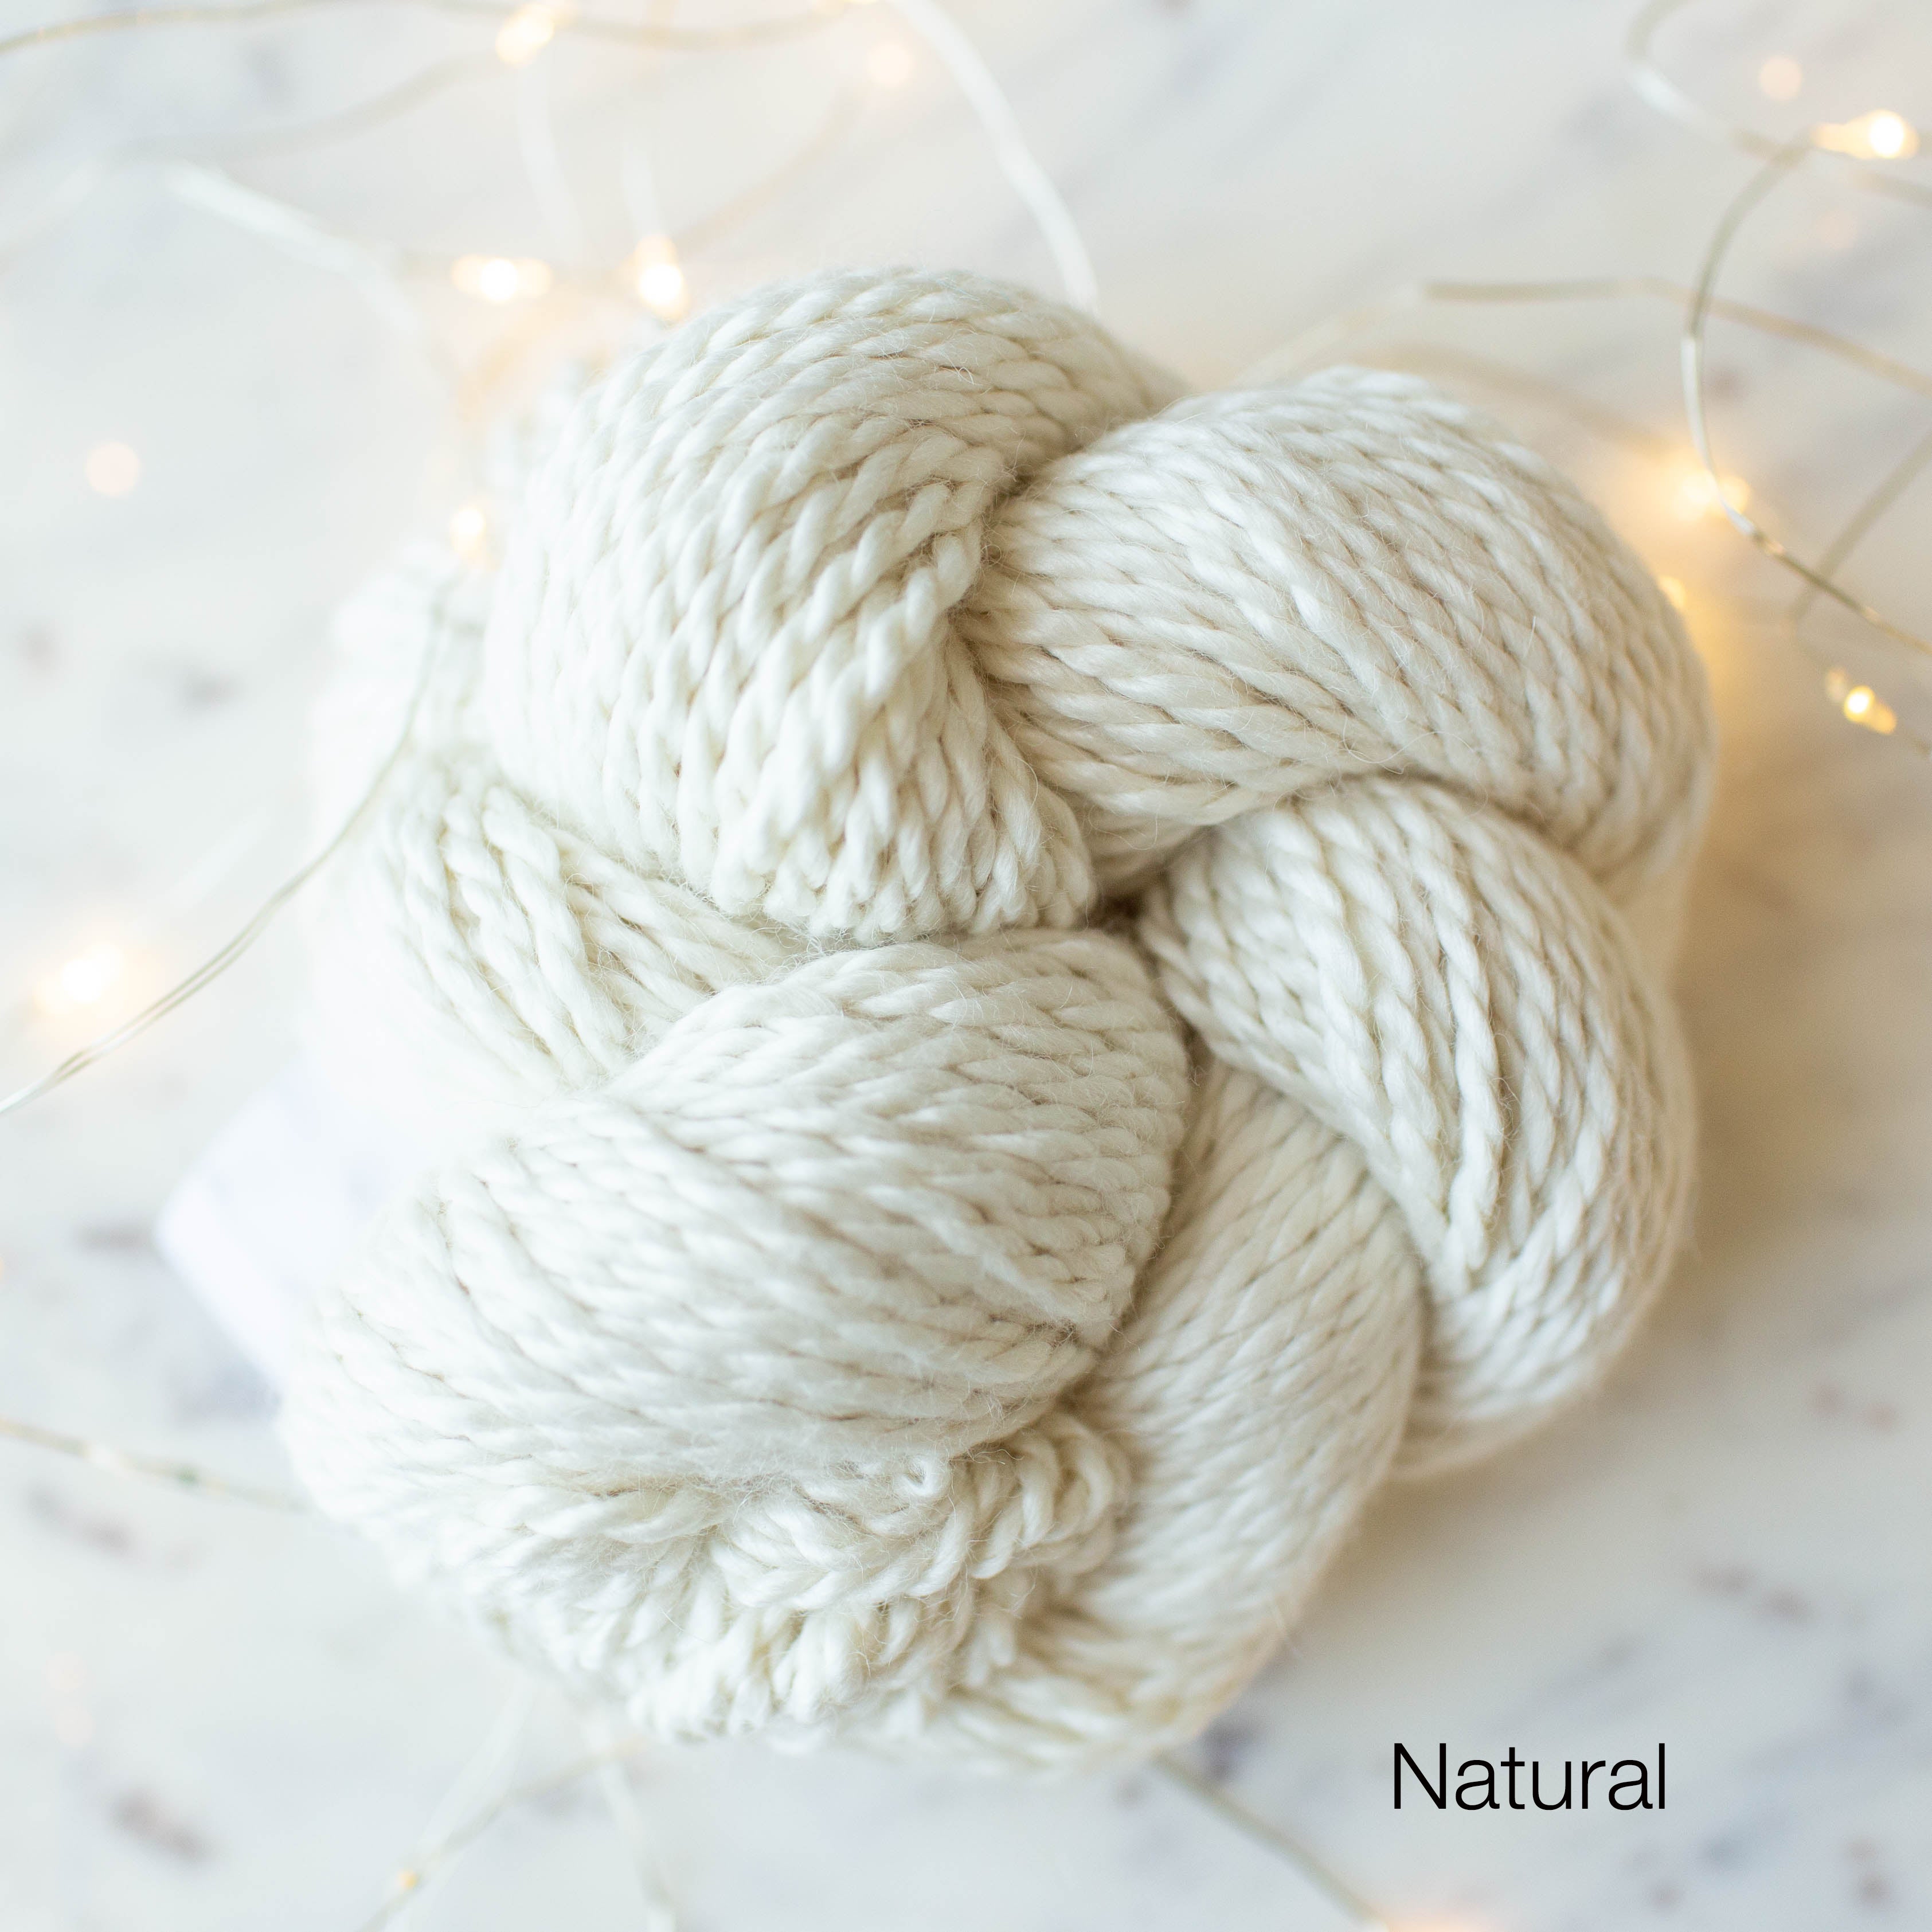 Knitcraft White Cotton Blend Plain DK Yarn 100g